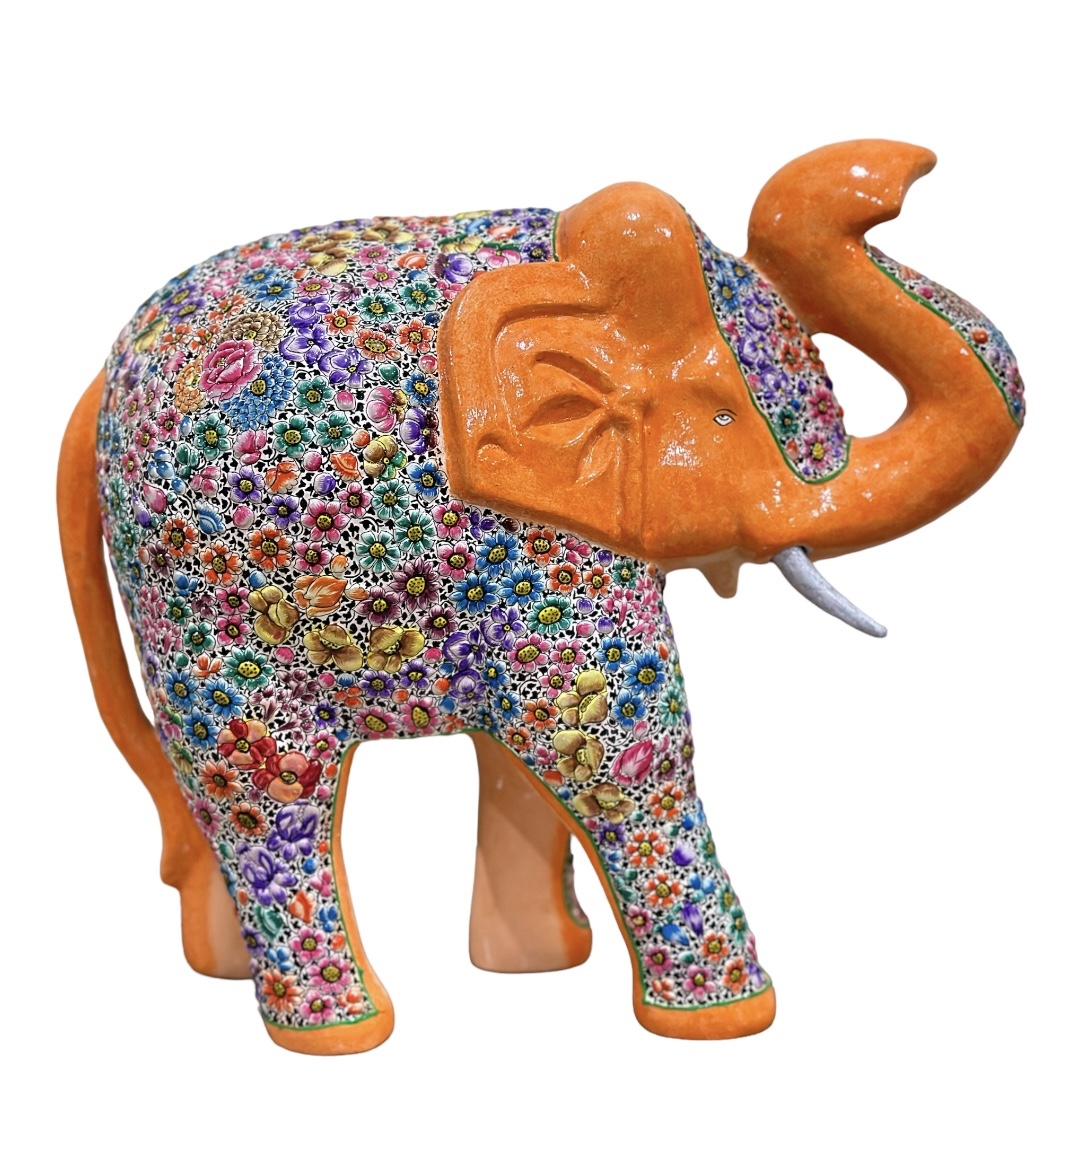 Hand painted Trunk Up Elephant ,Paper Mache Elephant Sculpture from Kashmir